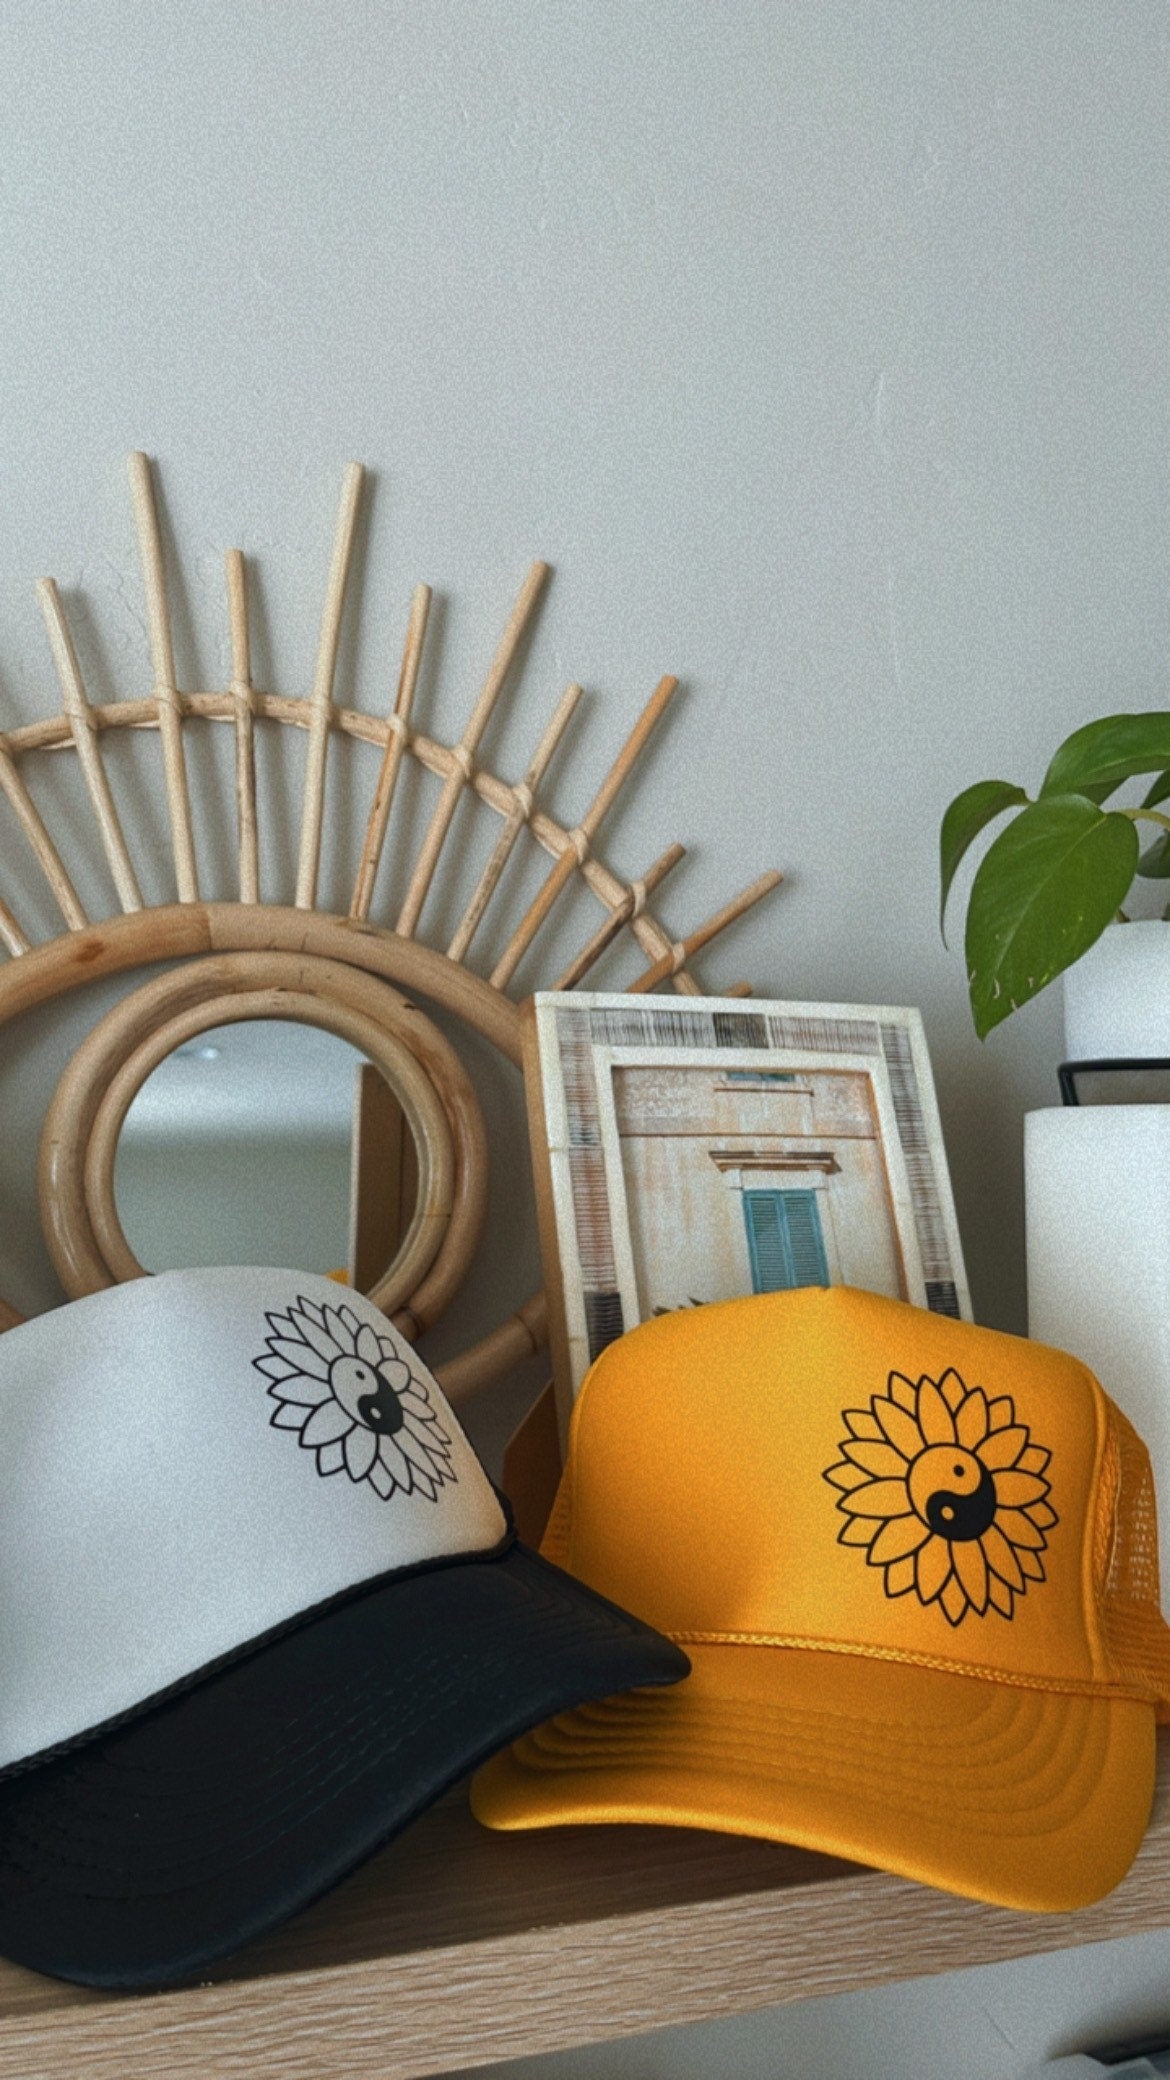 Bohemian Sunflower Trucker Hat, Cute Trucker Hat, Women's Hats, Yellow Hat, Retro Hat, Snapback, Summer Hat, Vacation Hat, Rad Hats,  Hat